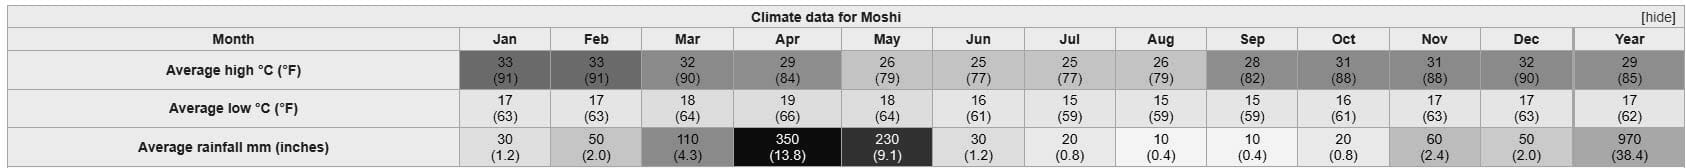 Moshi climate data